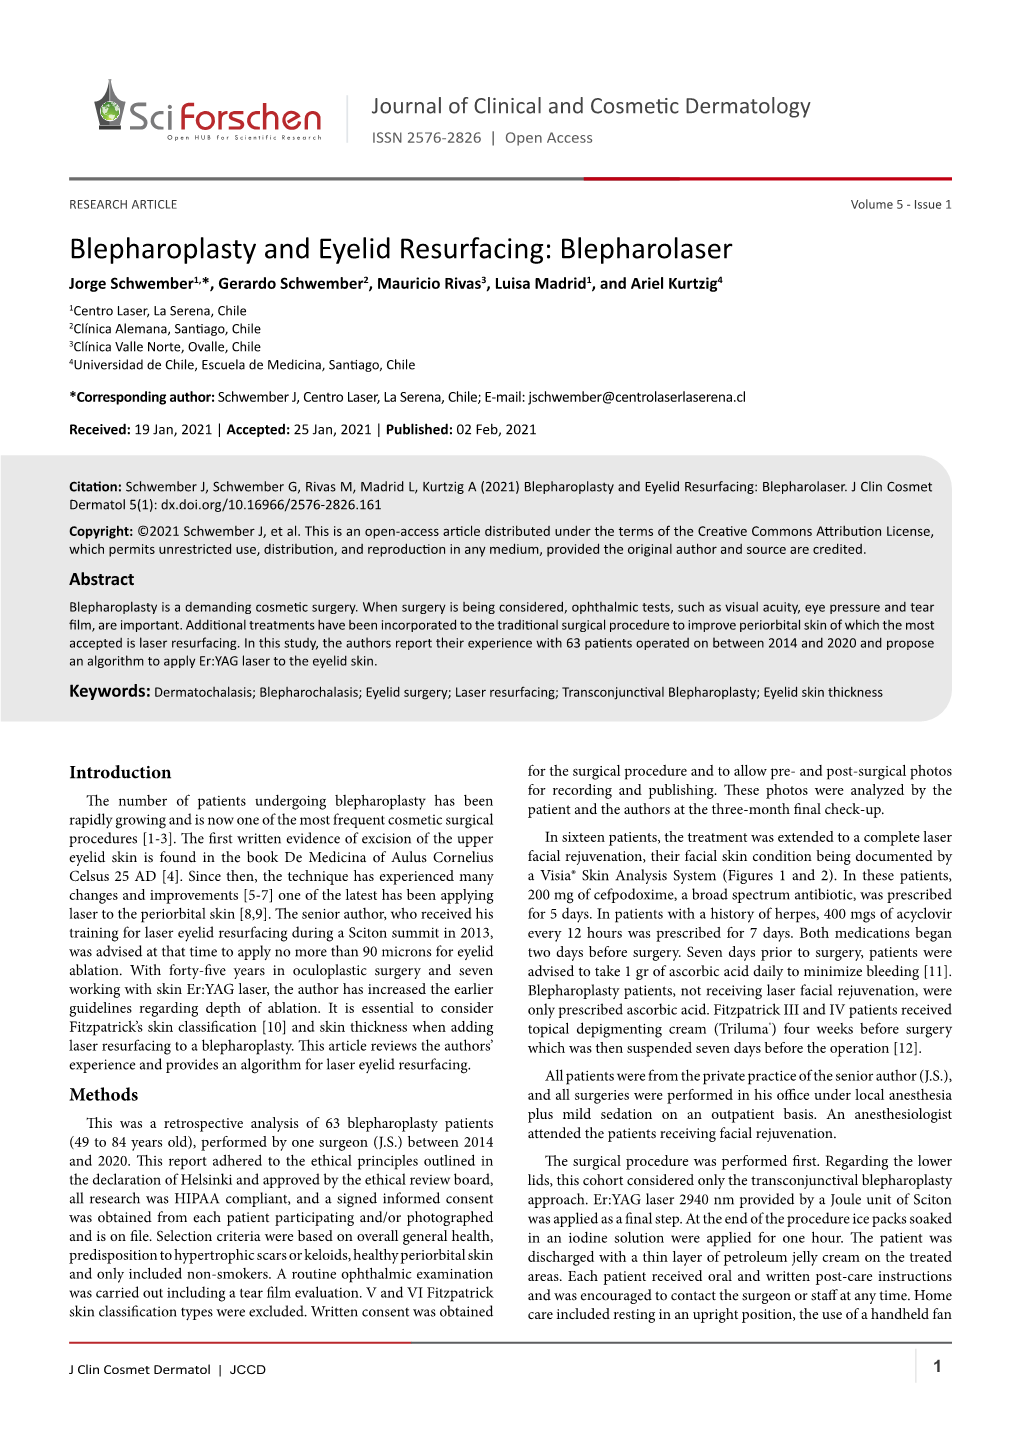 Blepharoplasty and Eyelid Resurfacing